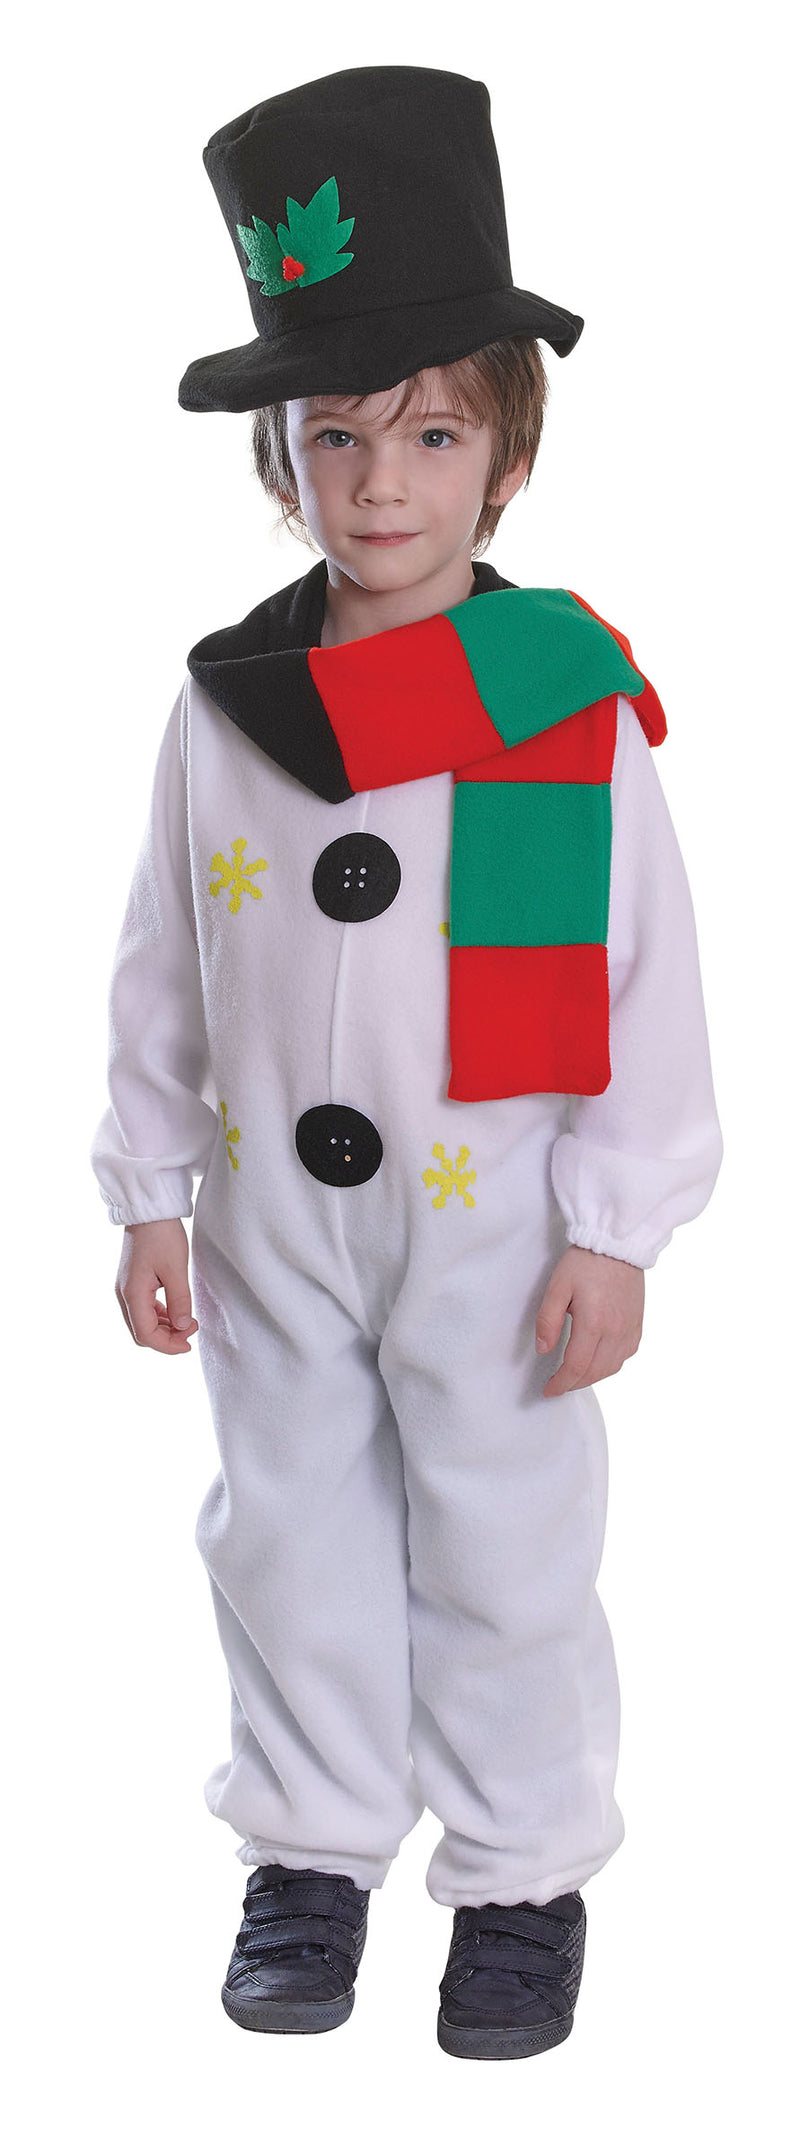 Snowman costume for boys